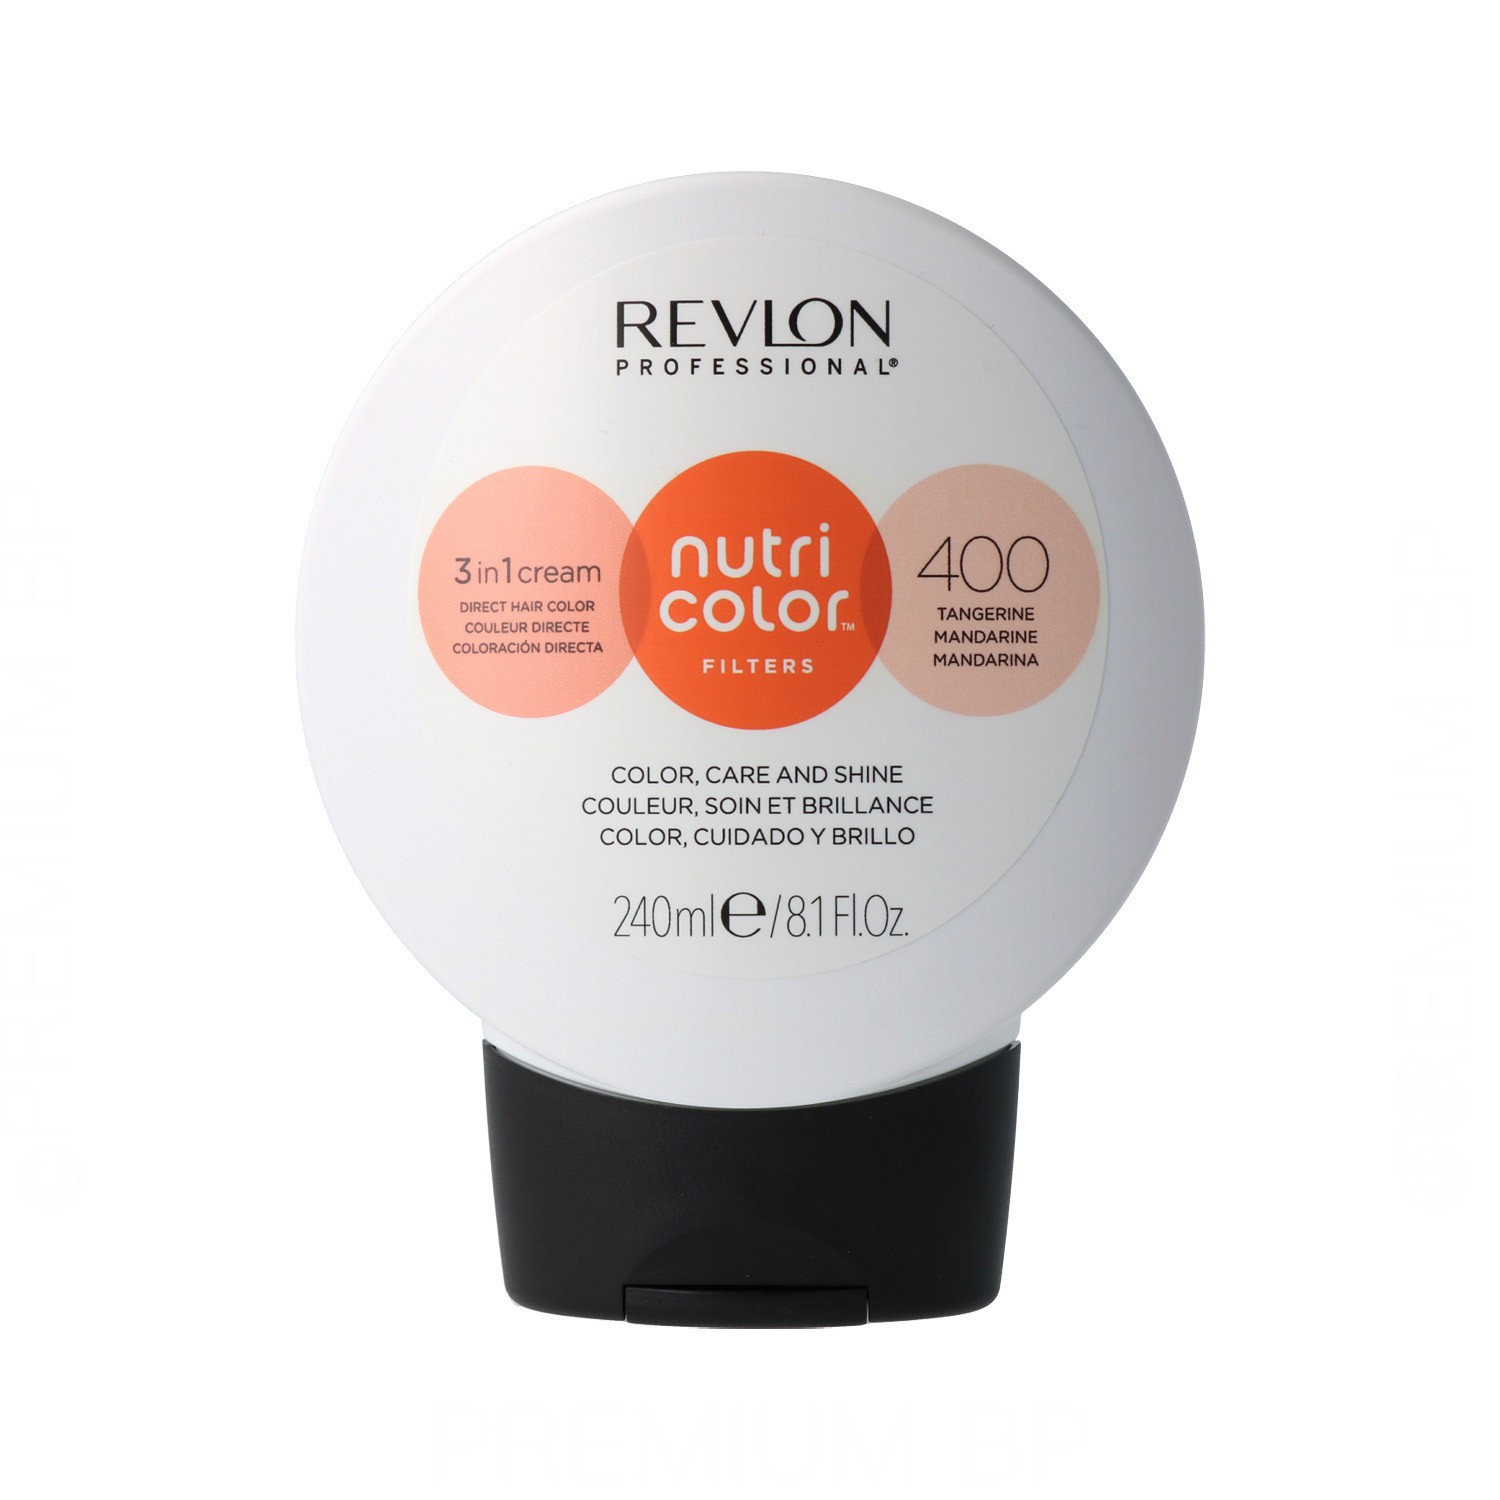 Revlon Nutri Color Filters 400/Tangerine 240 ml